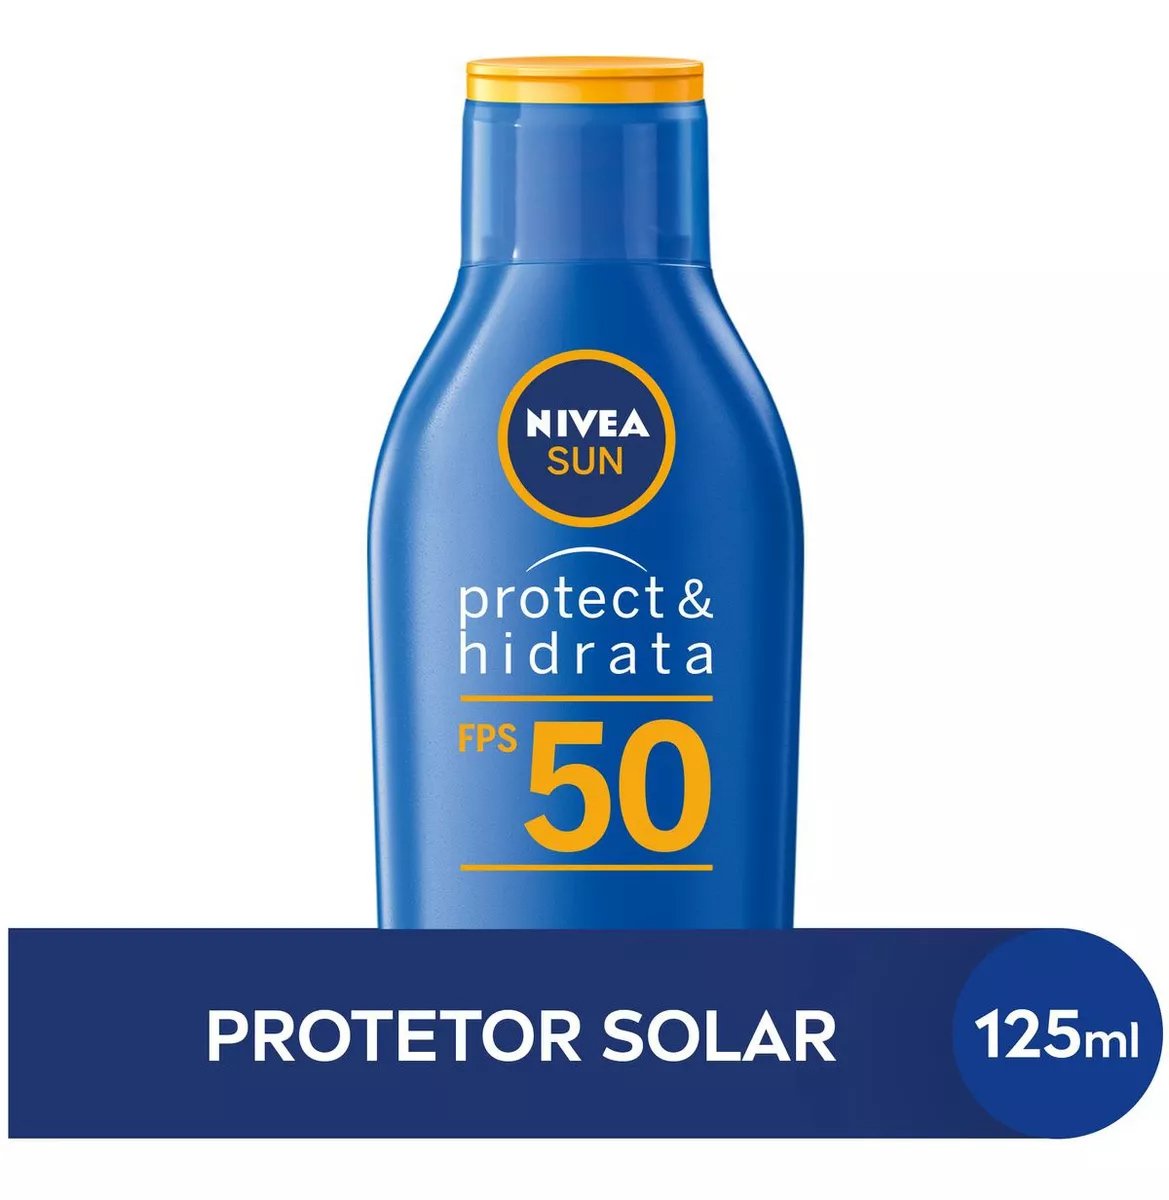 Nivea Sun Protetor Solar Protect & Hidrata Fps50 125ml